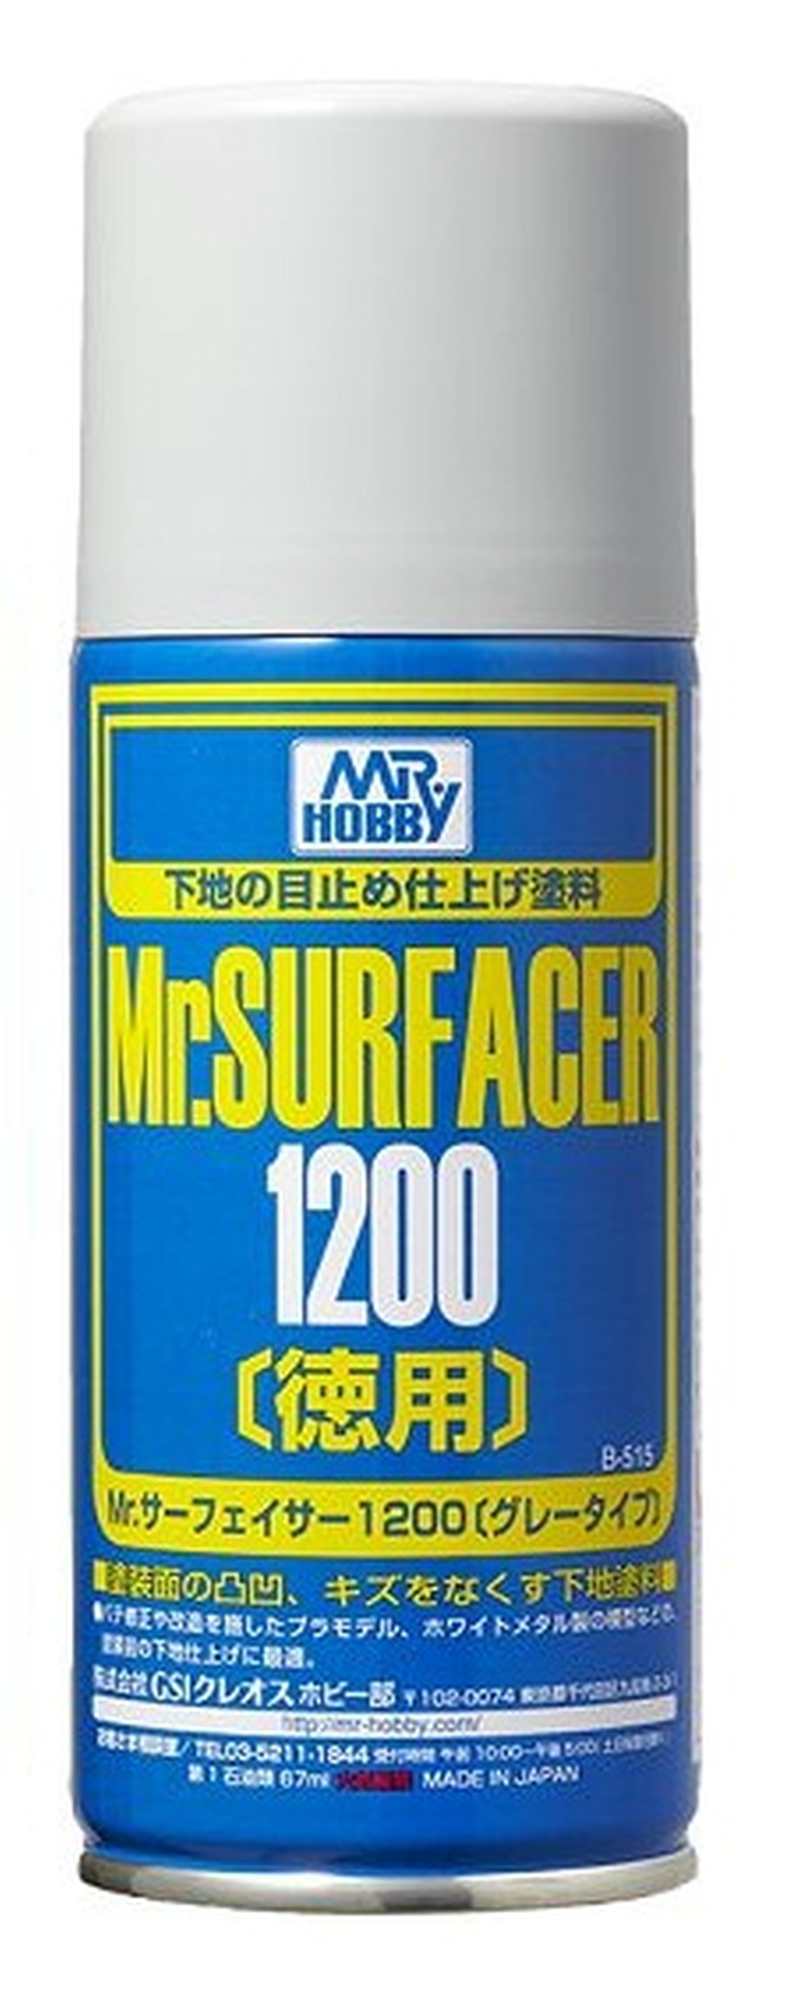 Mr. Surfacer 1200 Spray 170ml